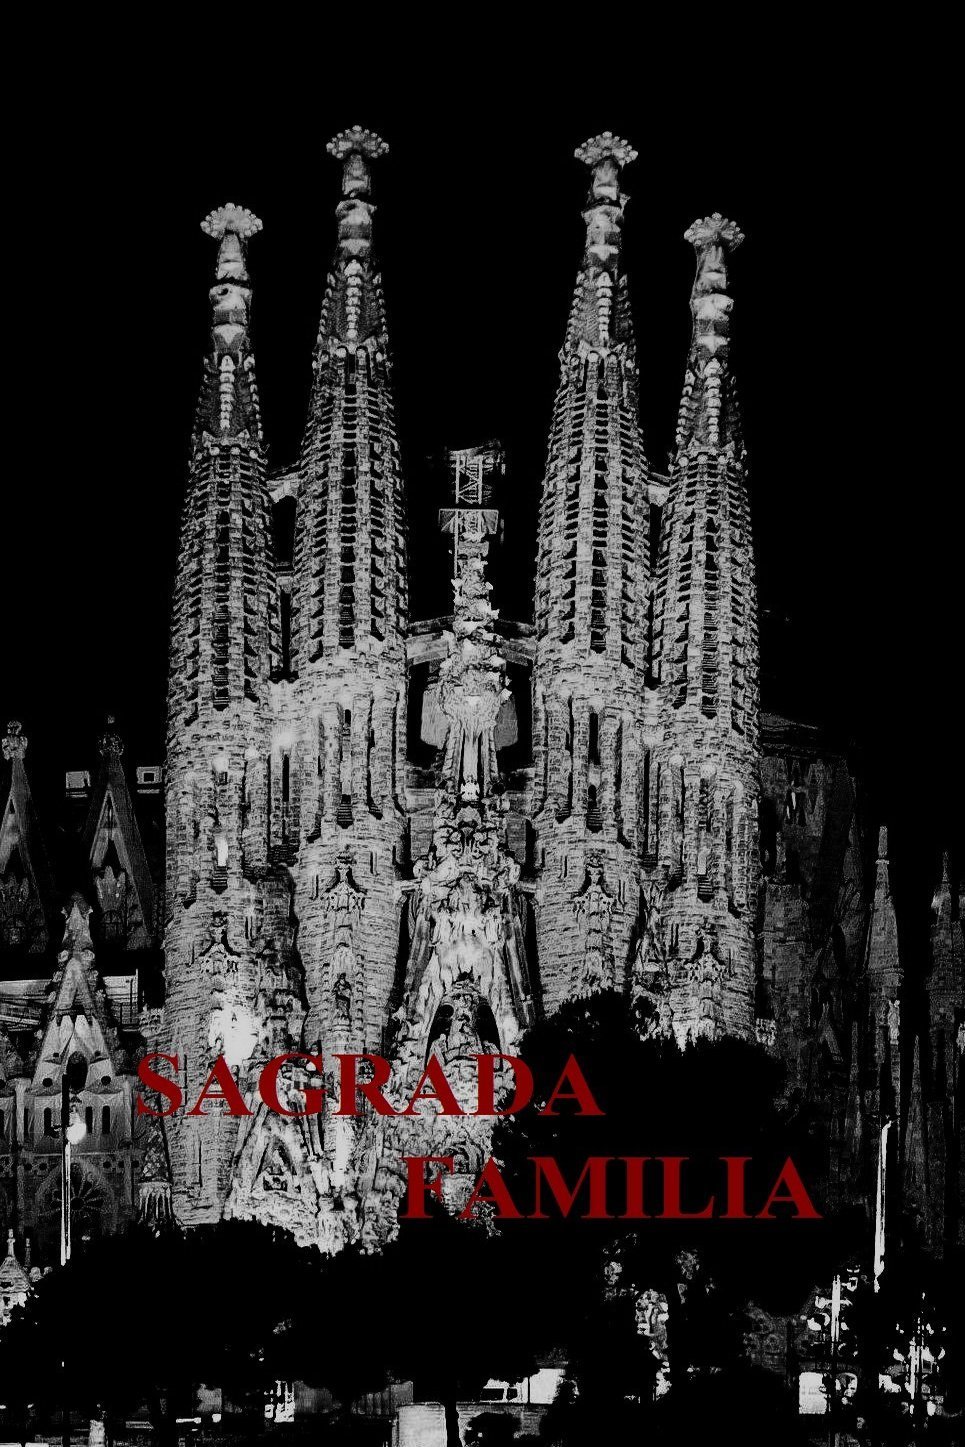 L'affiche originale du film Sagrada familia en espagnol